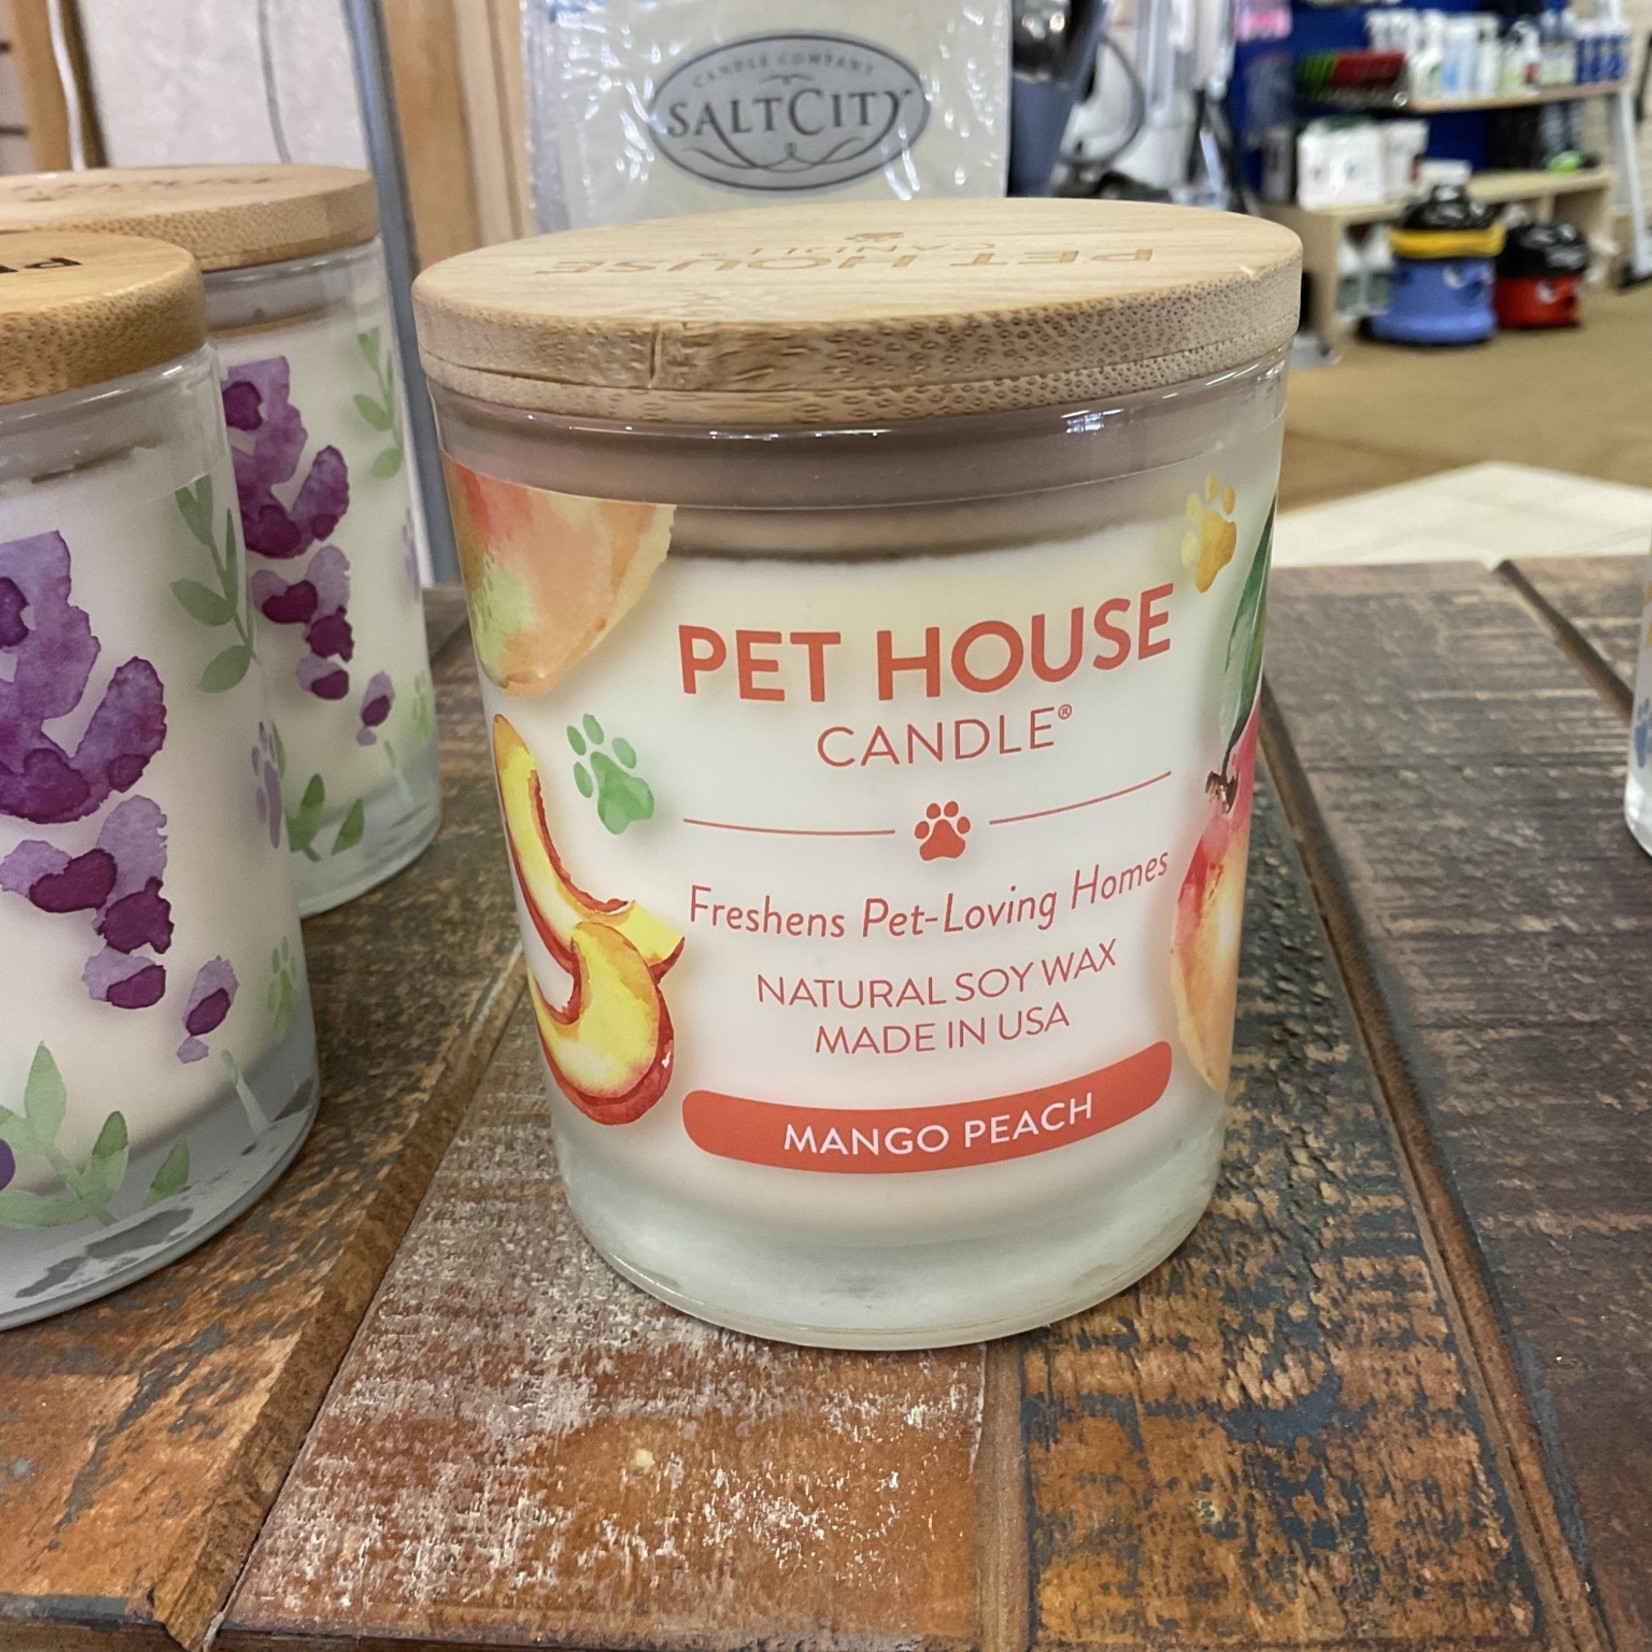 Pet House Mango Peach Candle